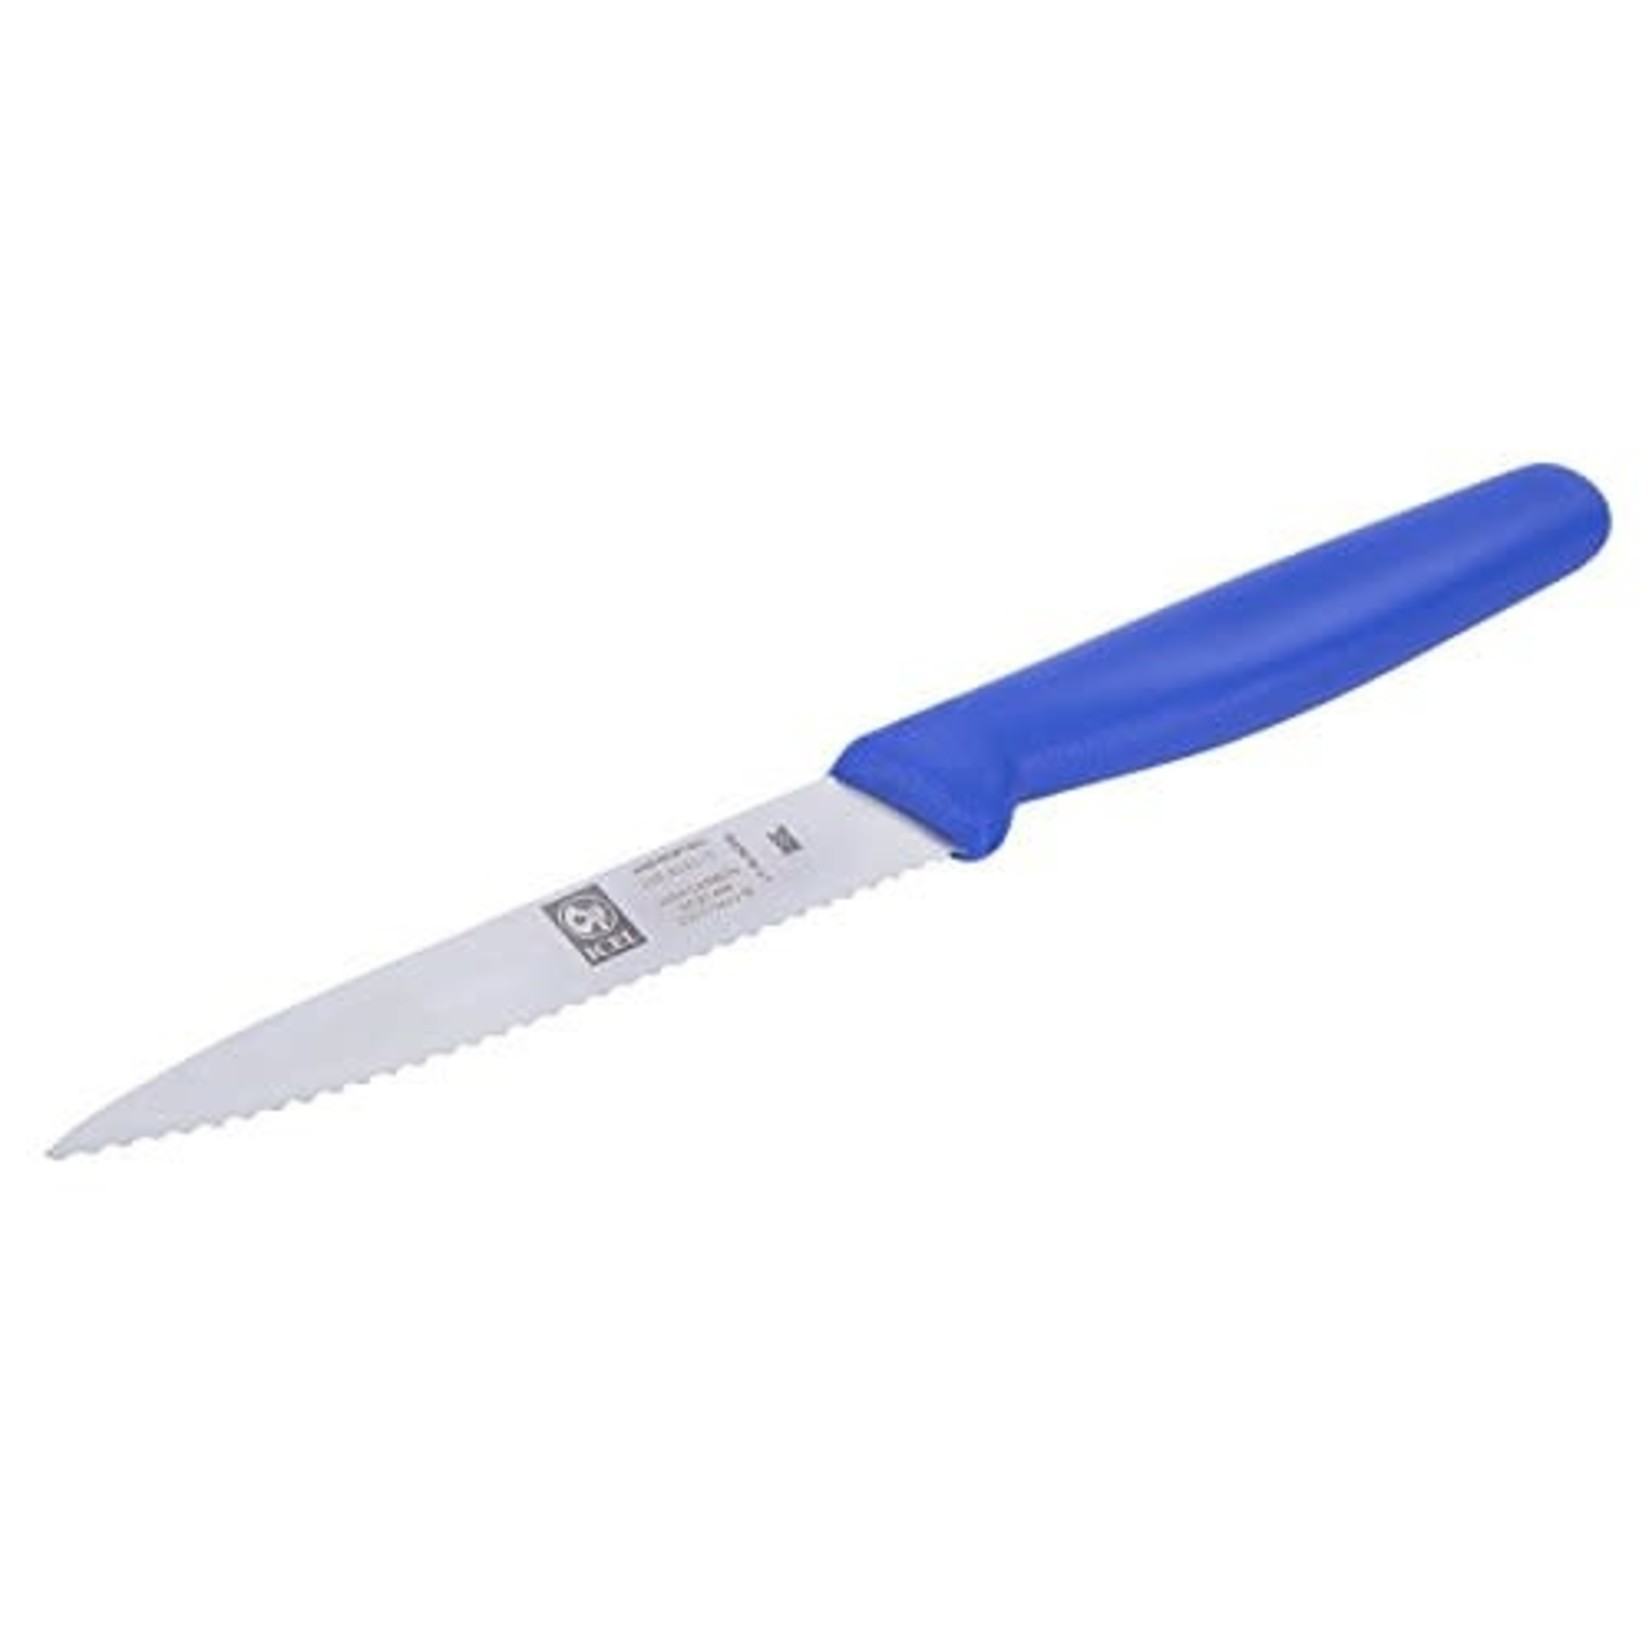 https://cdn.shoplightspeed.com/shops/627977/files/41809493/1652x1652x2/kadra-victorinox-325-blue-serrated-paring-knife.jpg